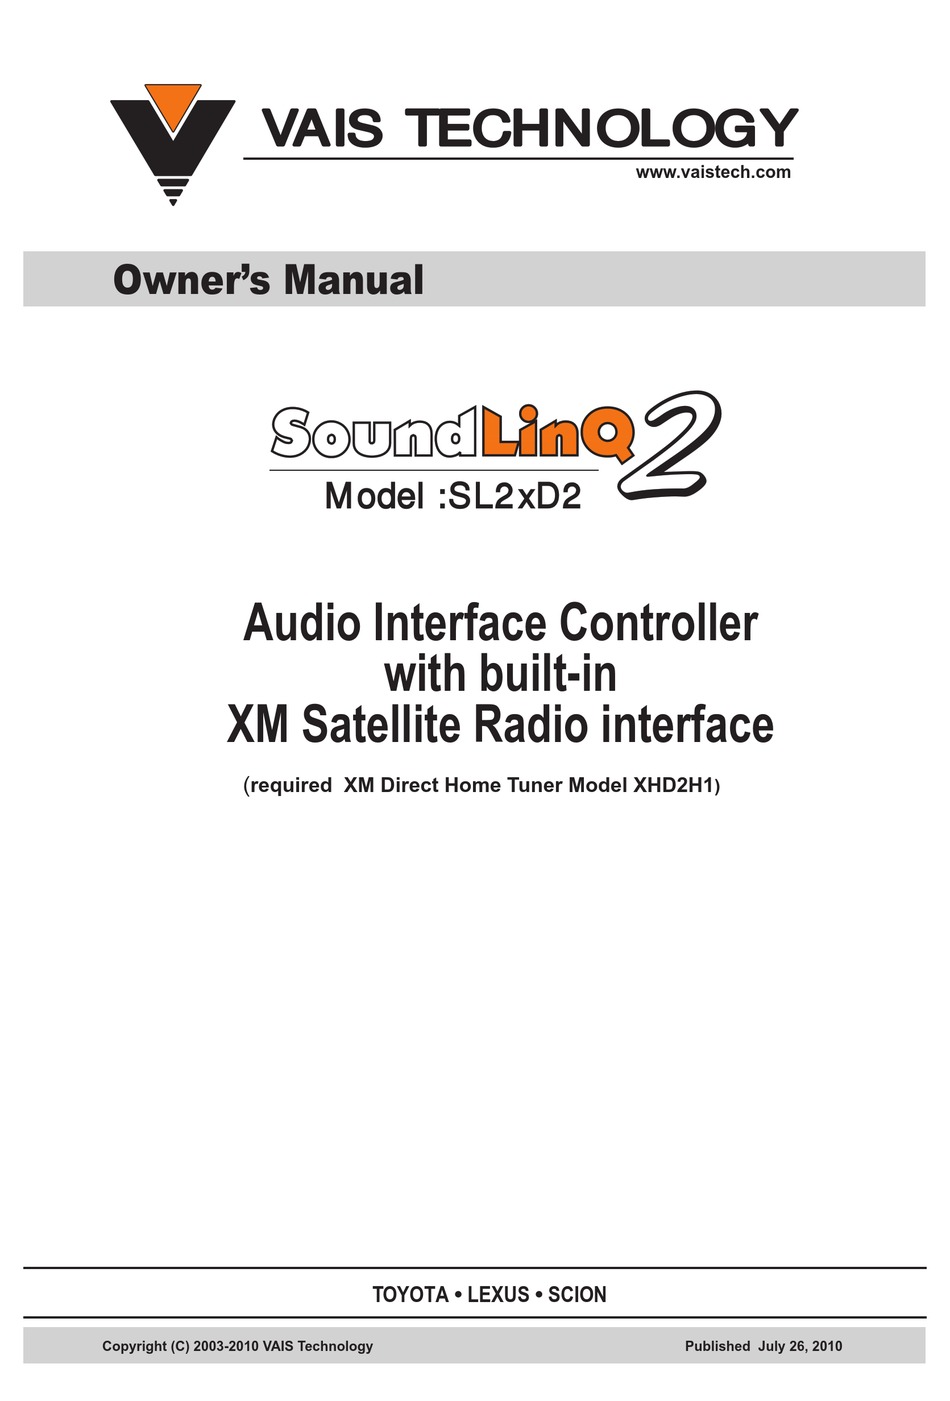 VAIS TECHNOLOGY SOUNDLINQ SL2XD2 OWNER'S MANUAL Pdf Download | ManualsLib